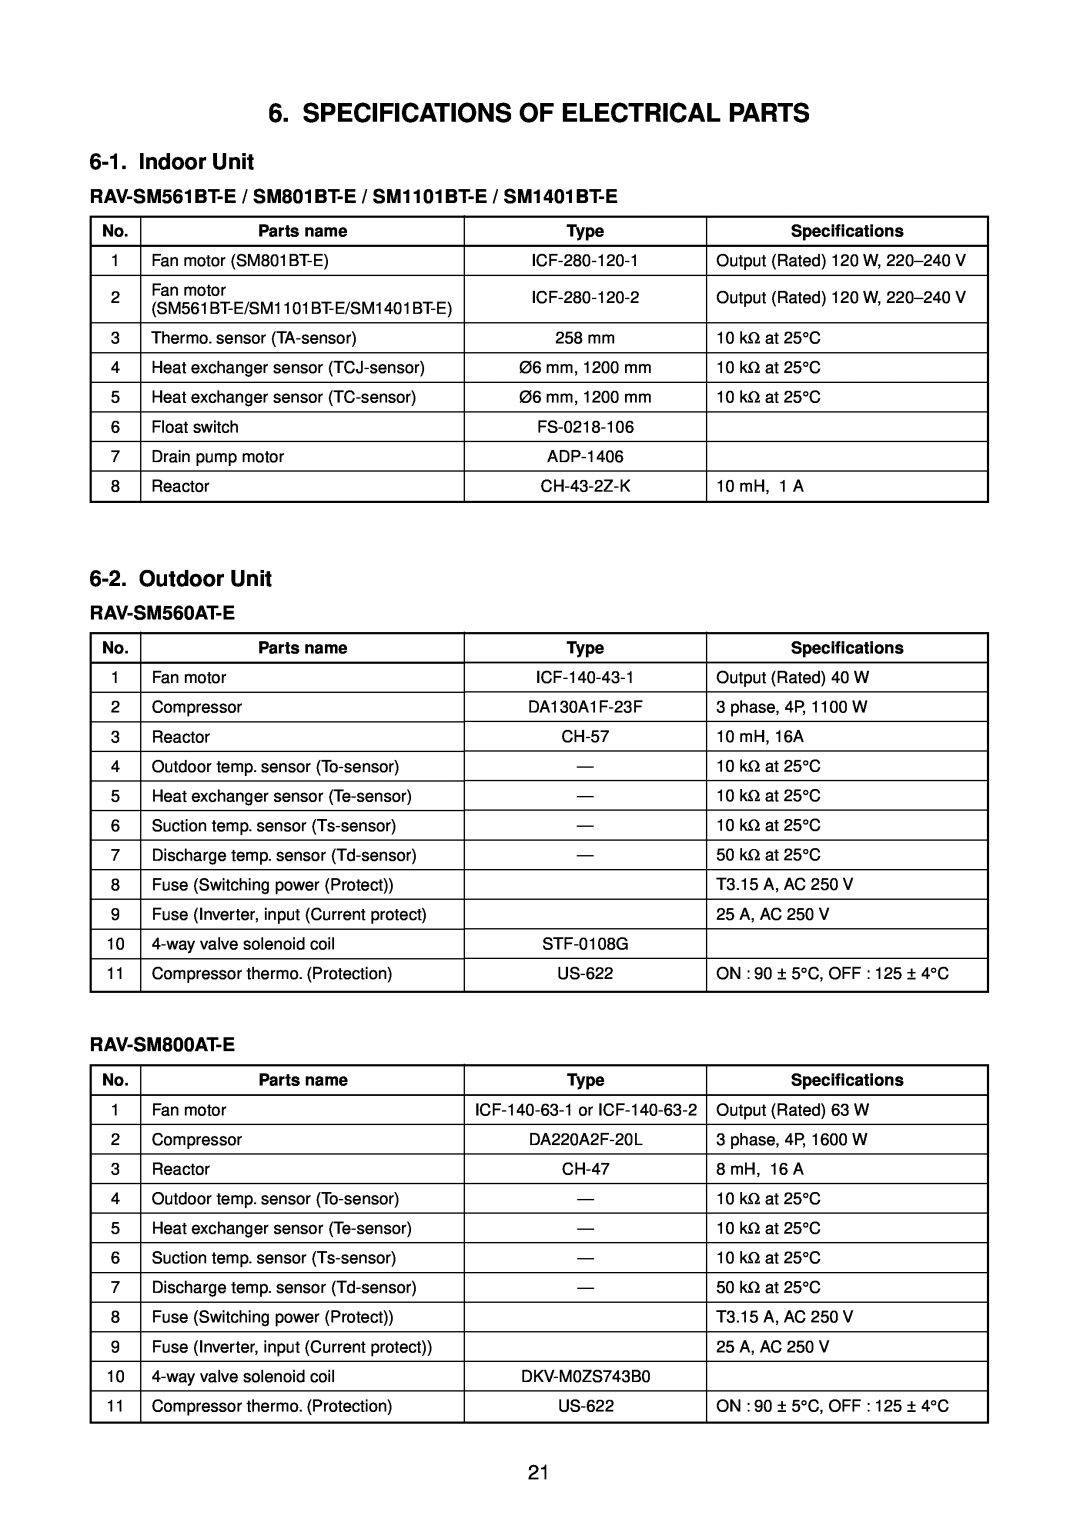 Toshiba RAV-SM801BT-E Specifications Of Electrical Parts, Indoor Unit, Outdoor Unit, RAV-SM560AT-E, RAV-SM800AT-E 